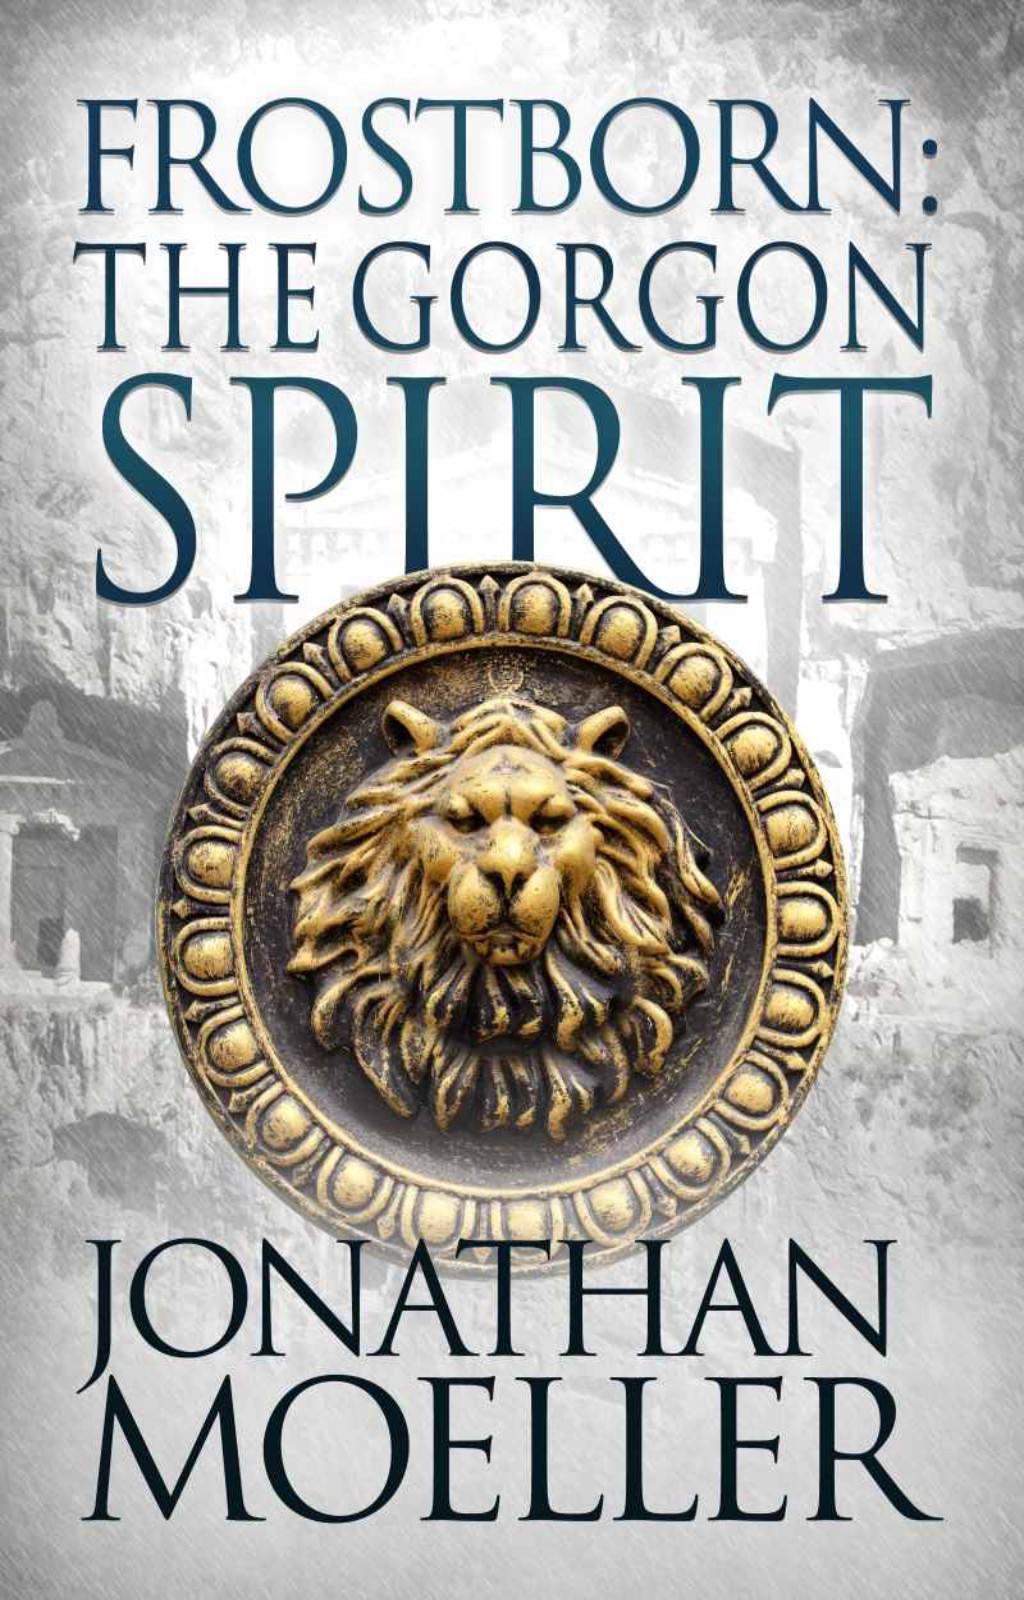 Frostborn: The Gorgon Spirit by Jonathan Moeller